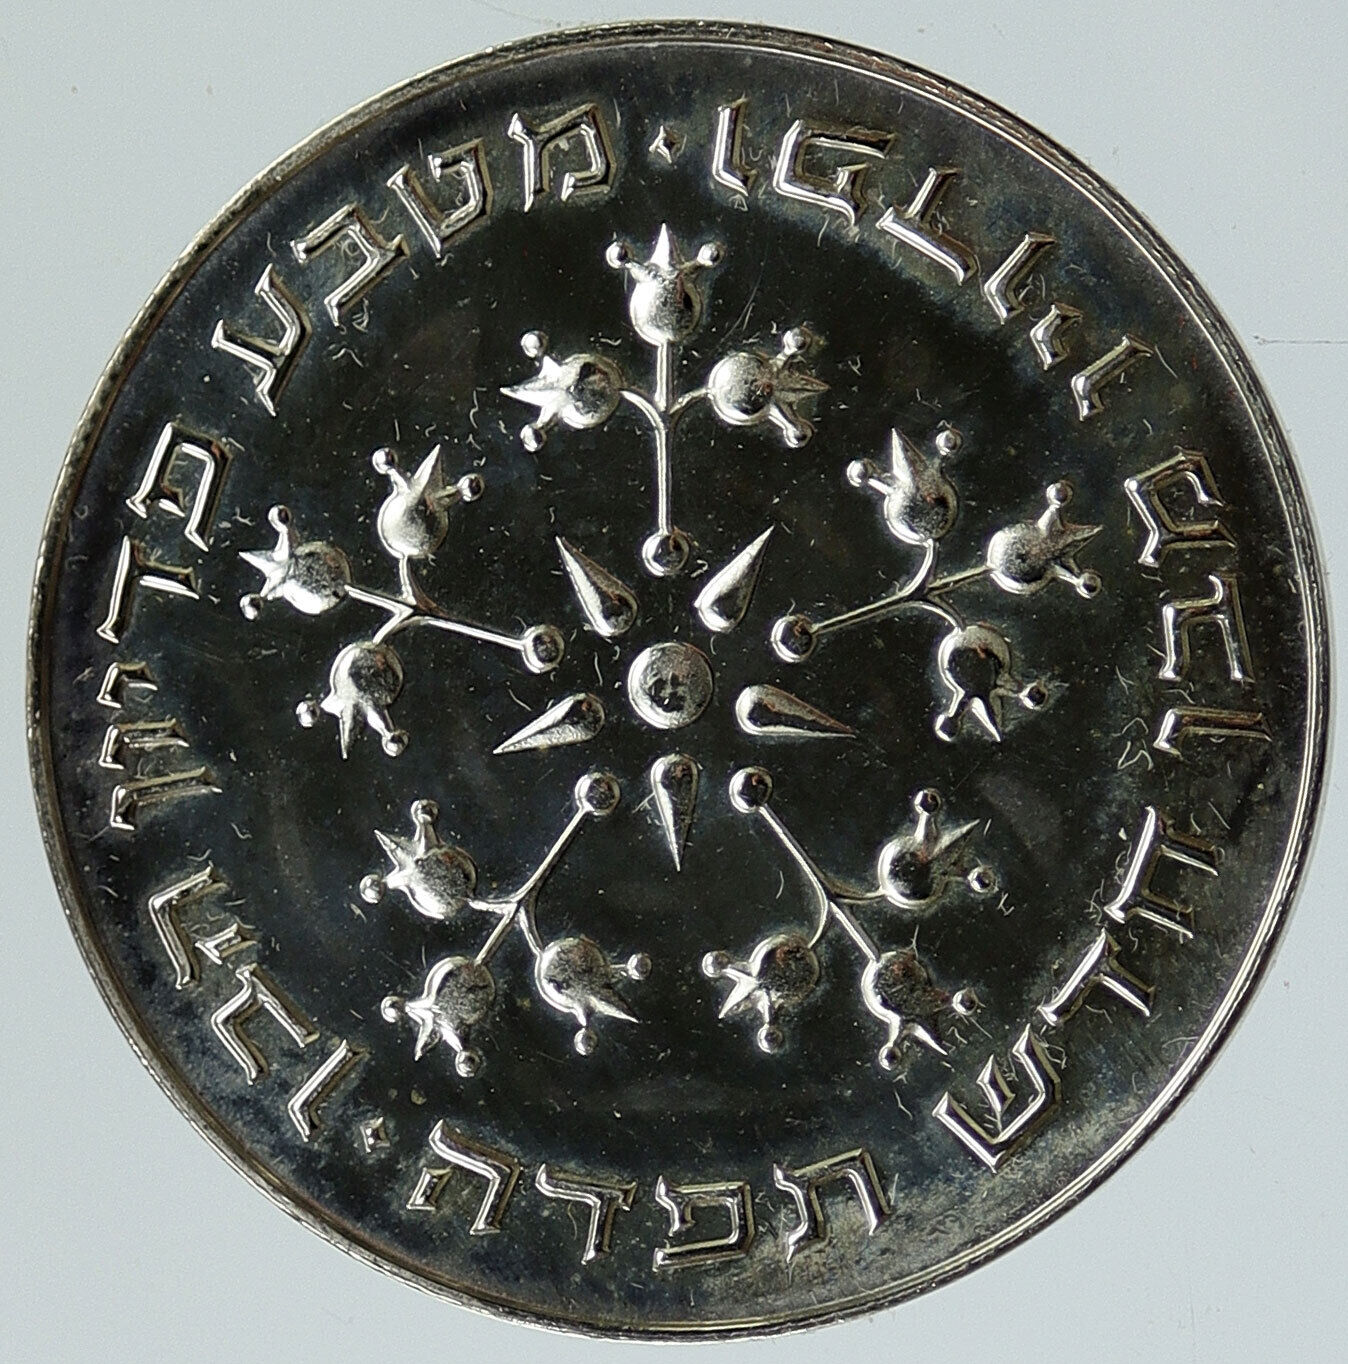 1977 ISRAEL Jewish Pidyon Haben POMEGRANATE MENORAH BU Silver 25 Lr Coin i116771